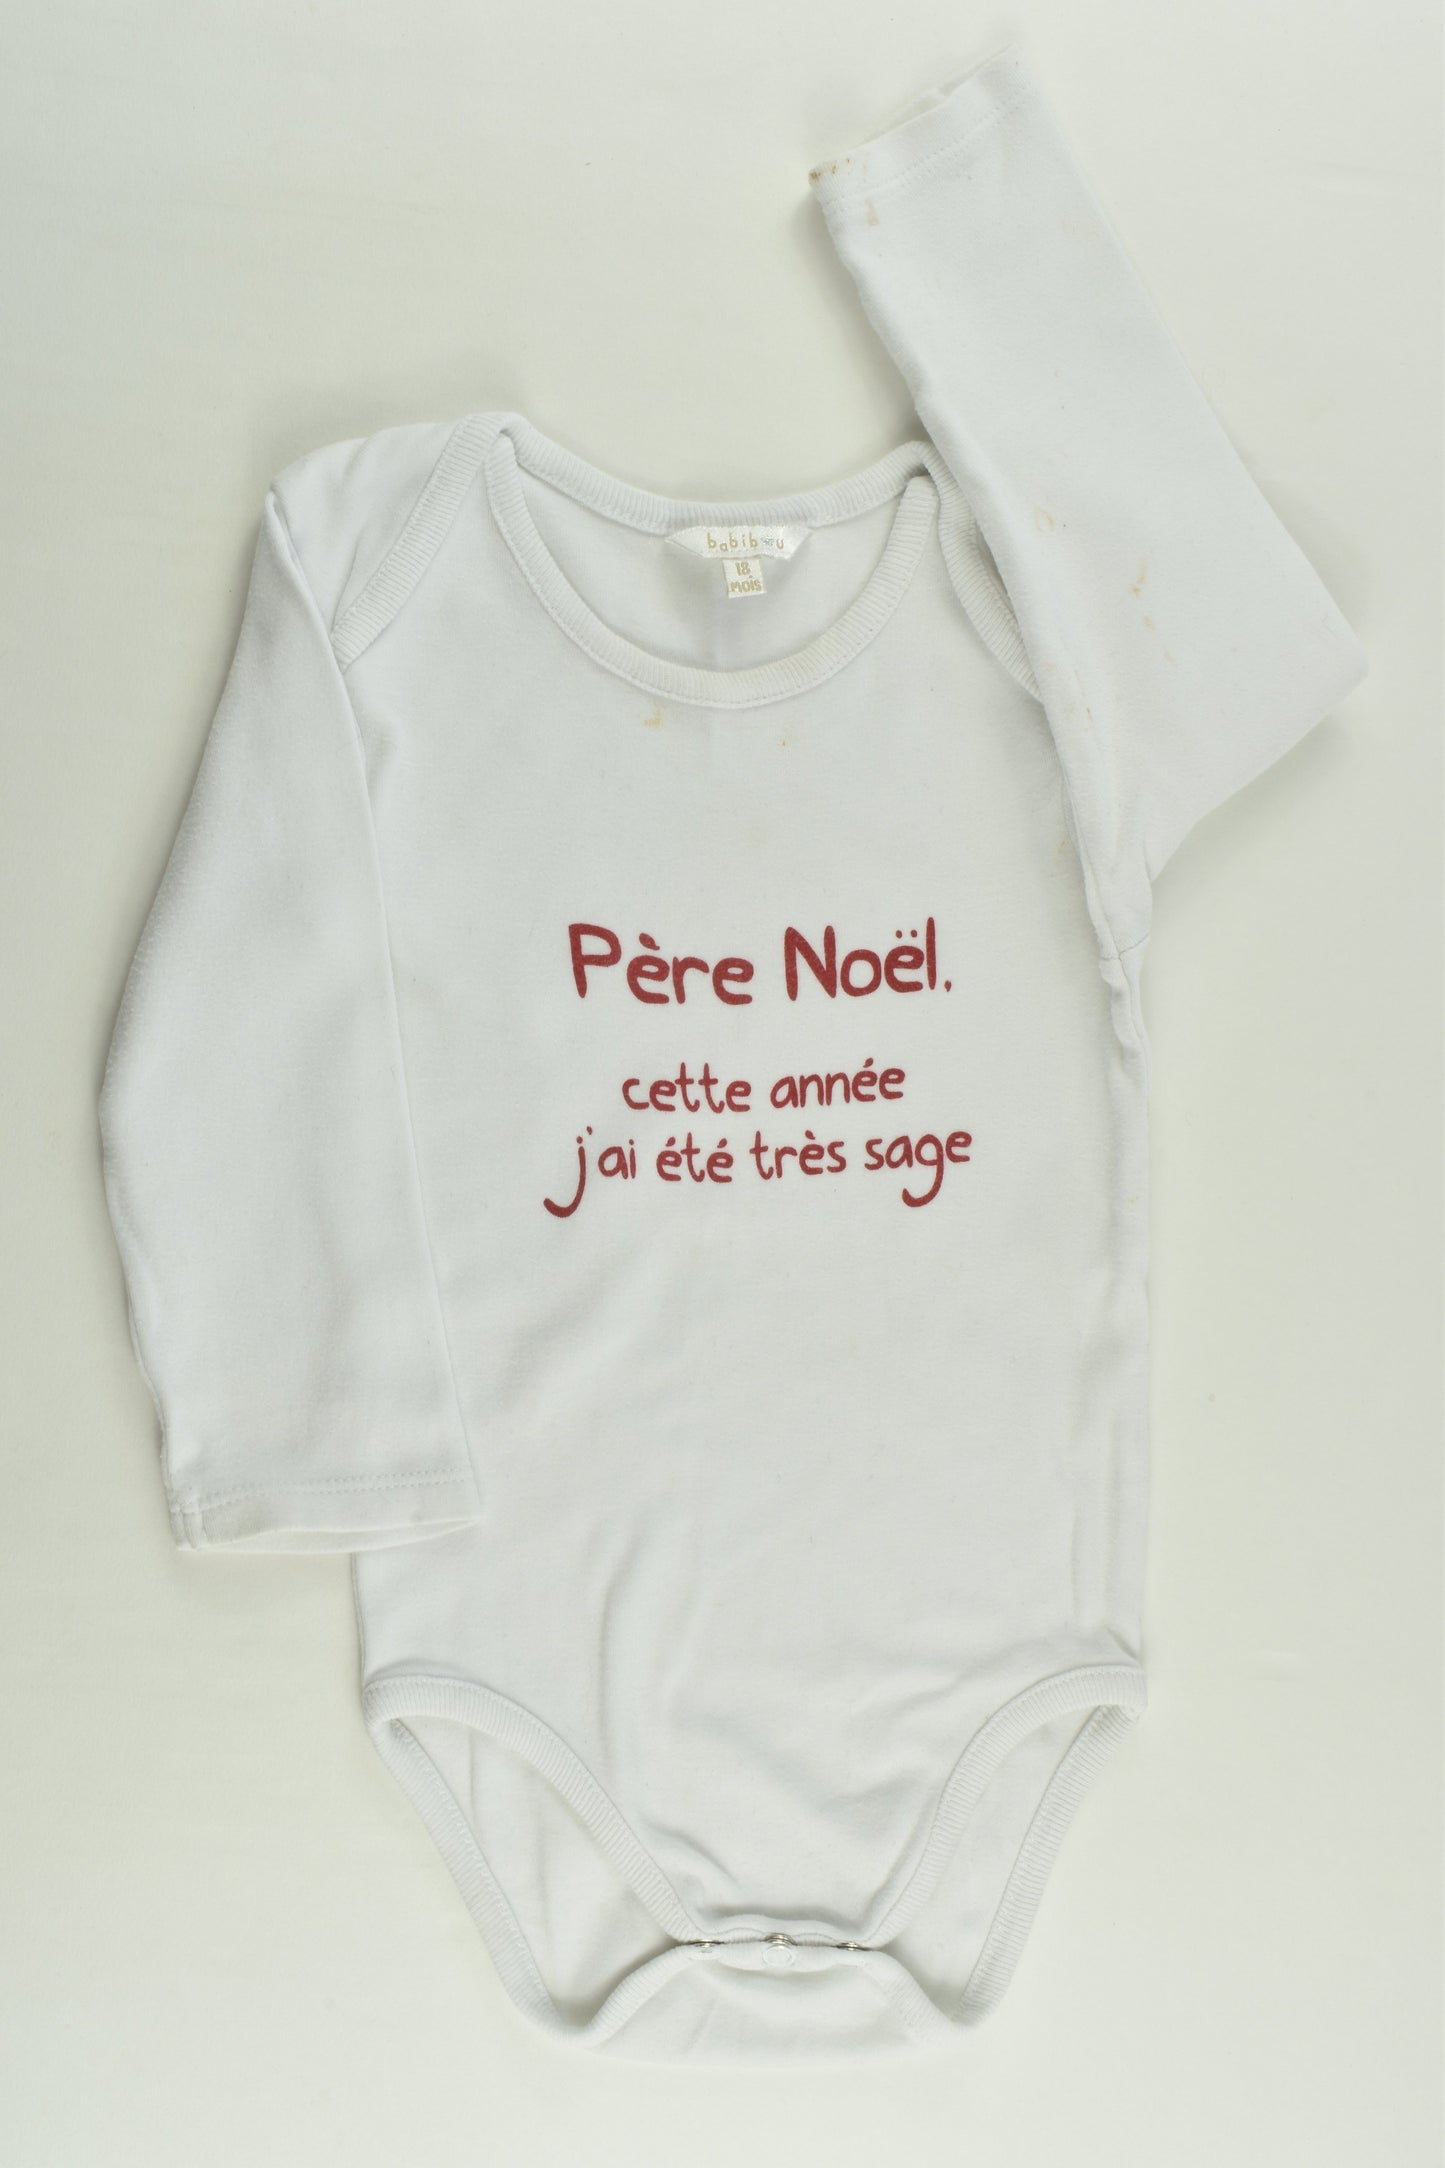 Babibou Size 1 (18 months) 'Pére Noël' Bodysuit